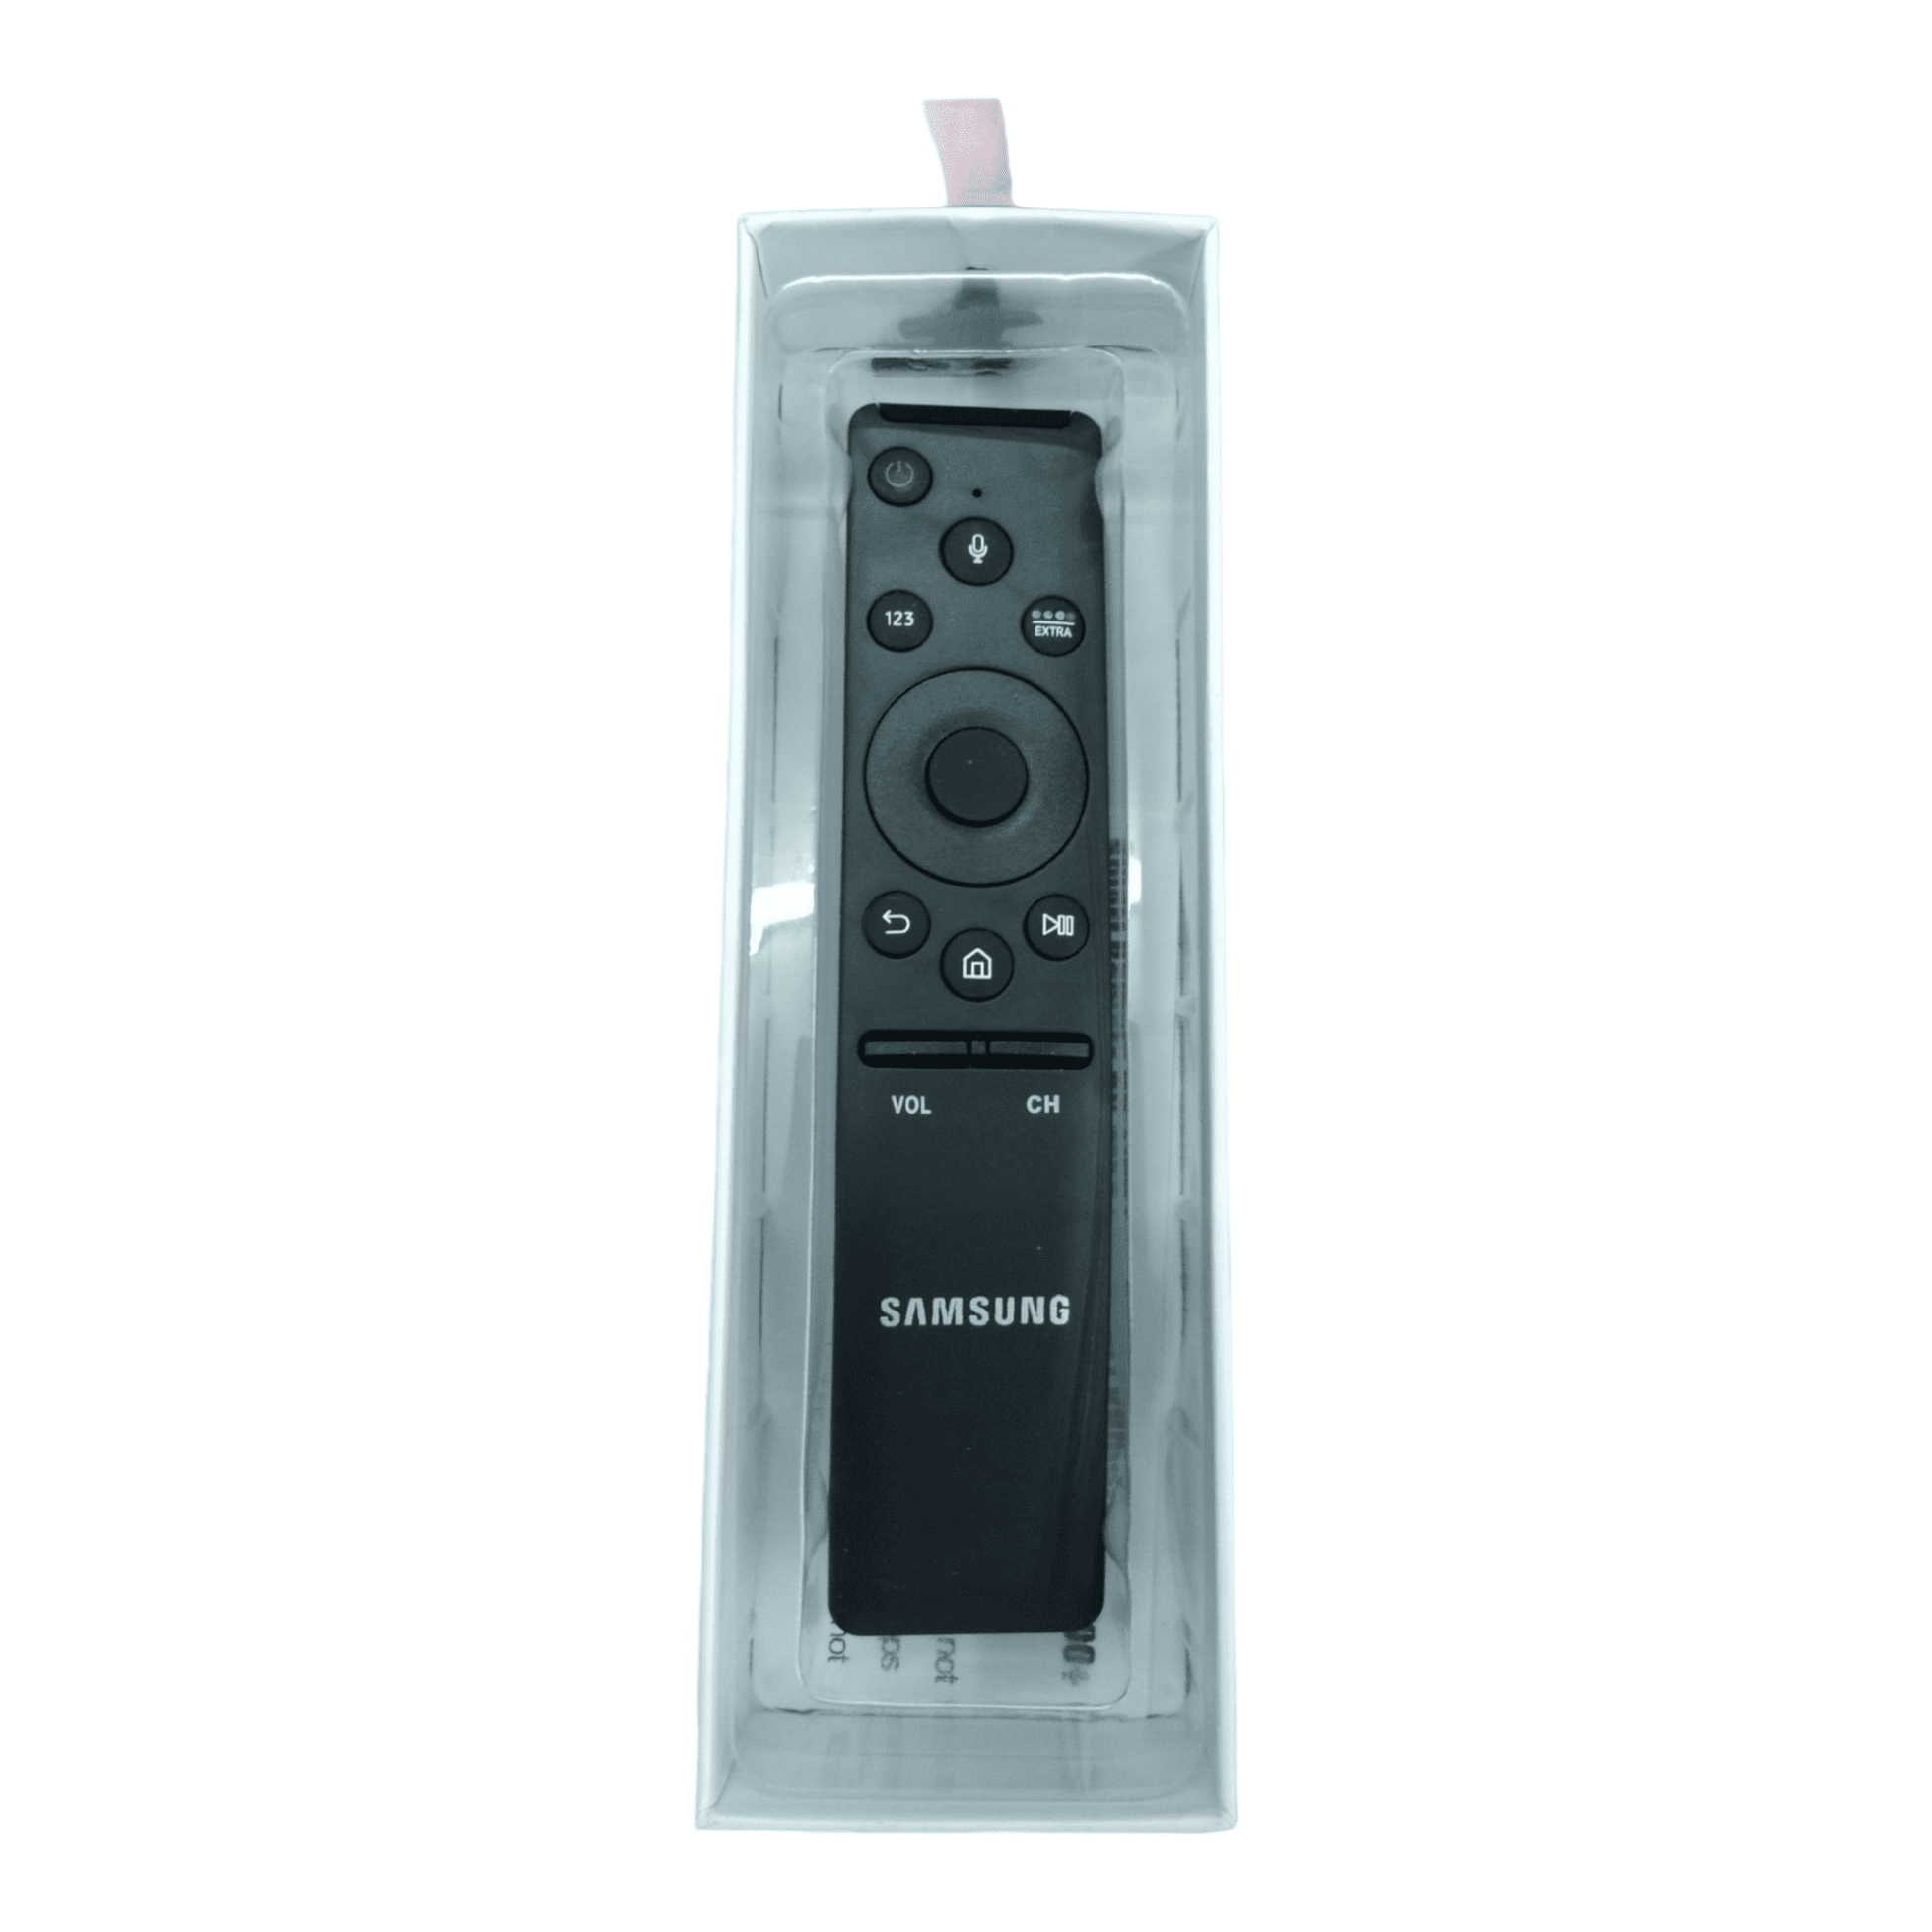 Samsung Smart TV remote control with voice recognition - Faritha